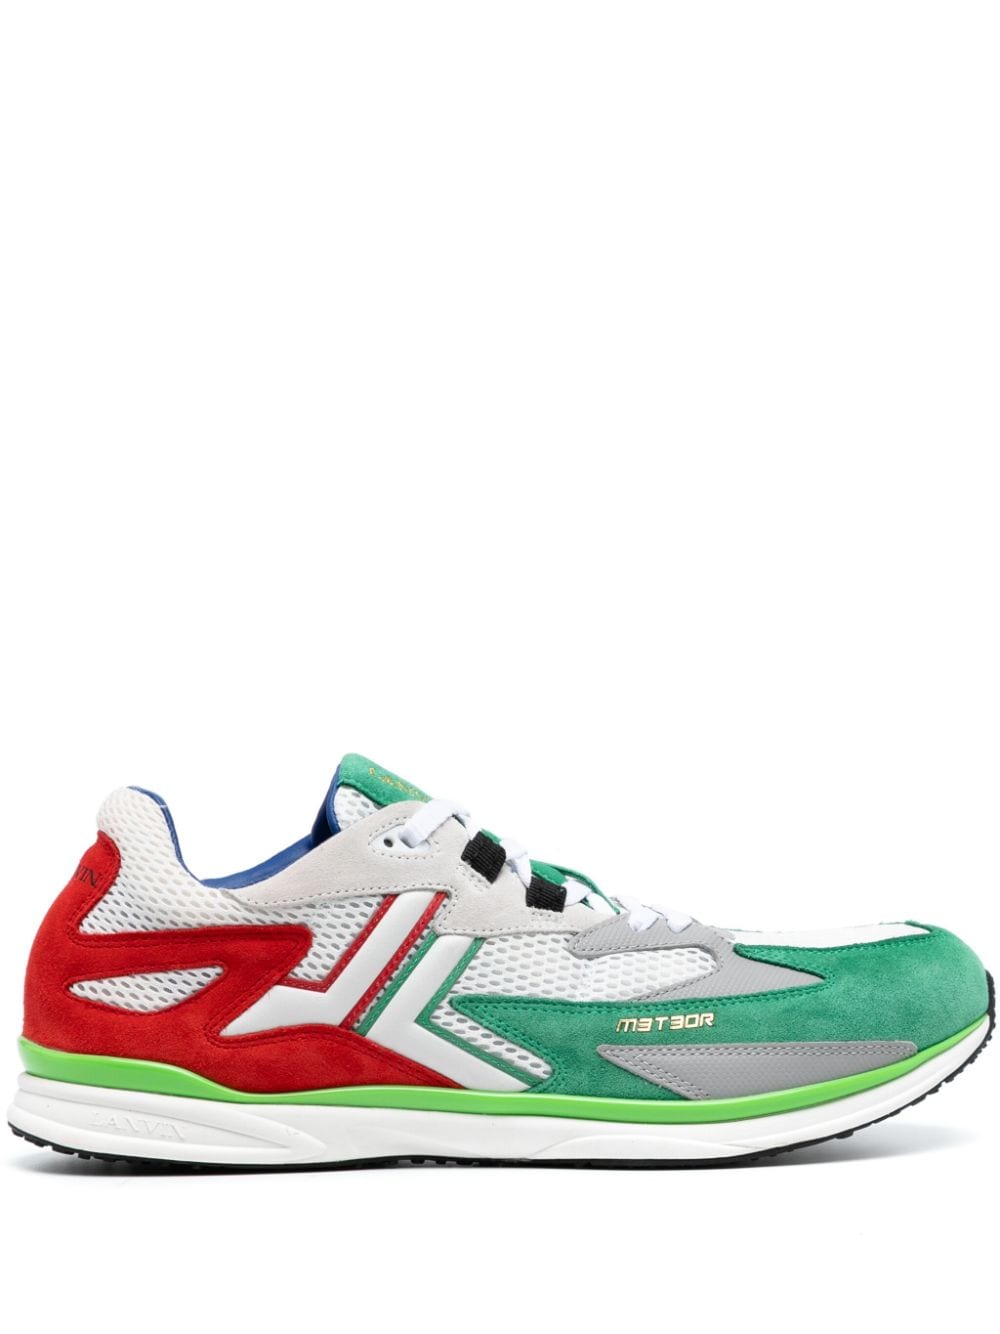 Lanvin Meteor Runner colour-block sneakers - Green von Lanvin